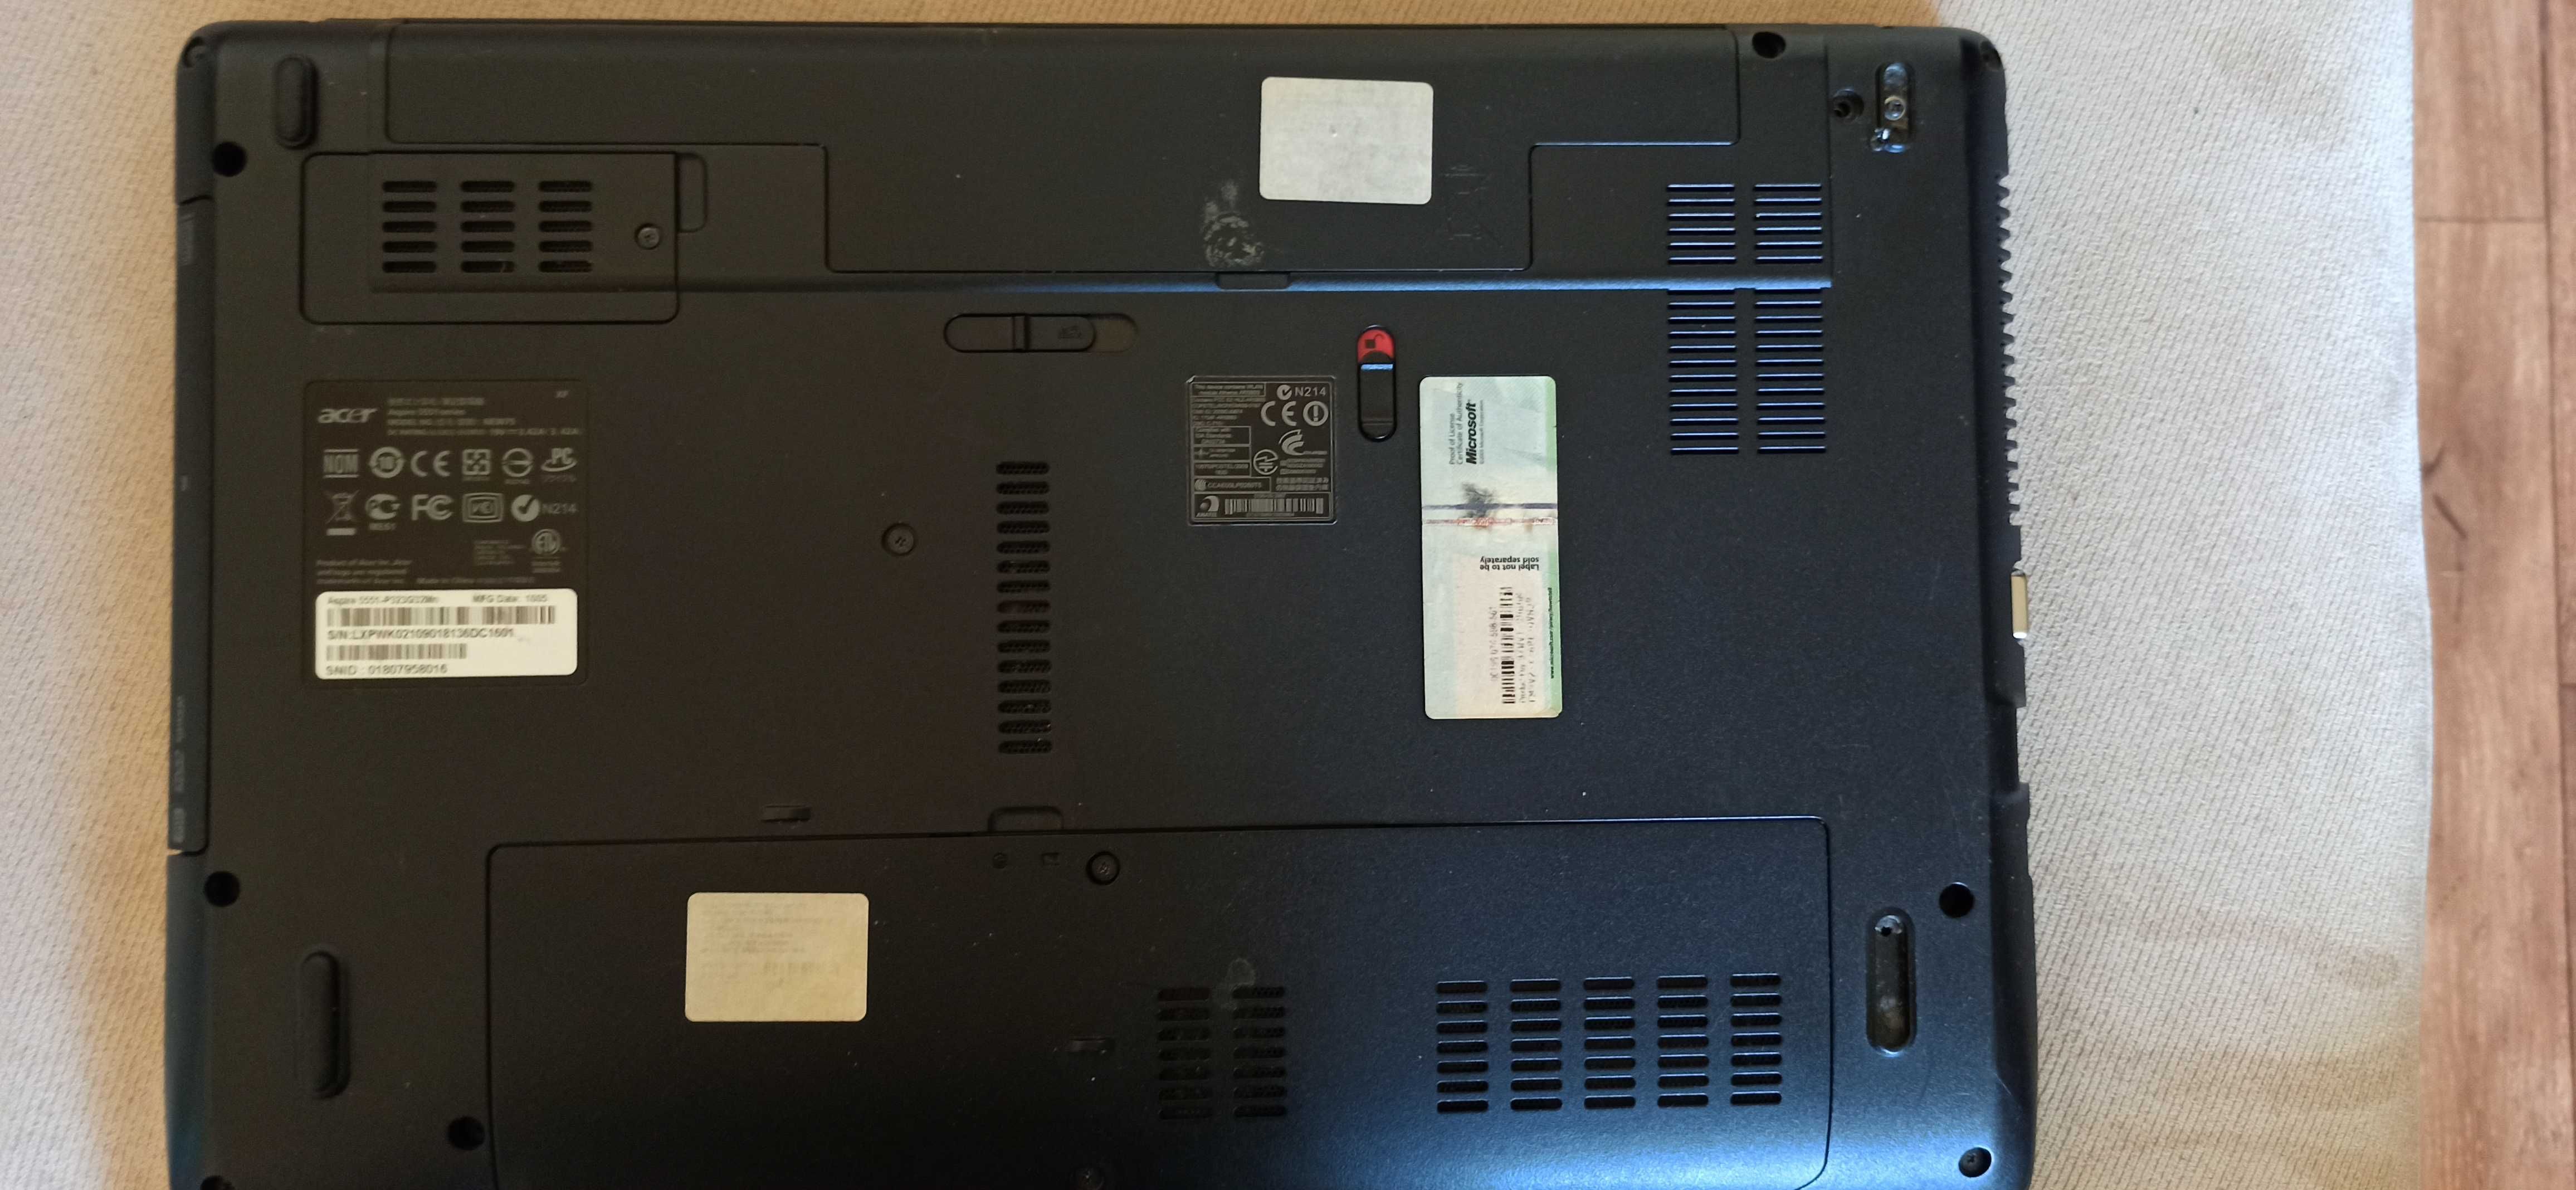 Ноутбук Acer Aspire 5551 P323G32Min на запчасти или ремонт